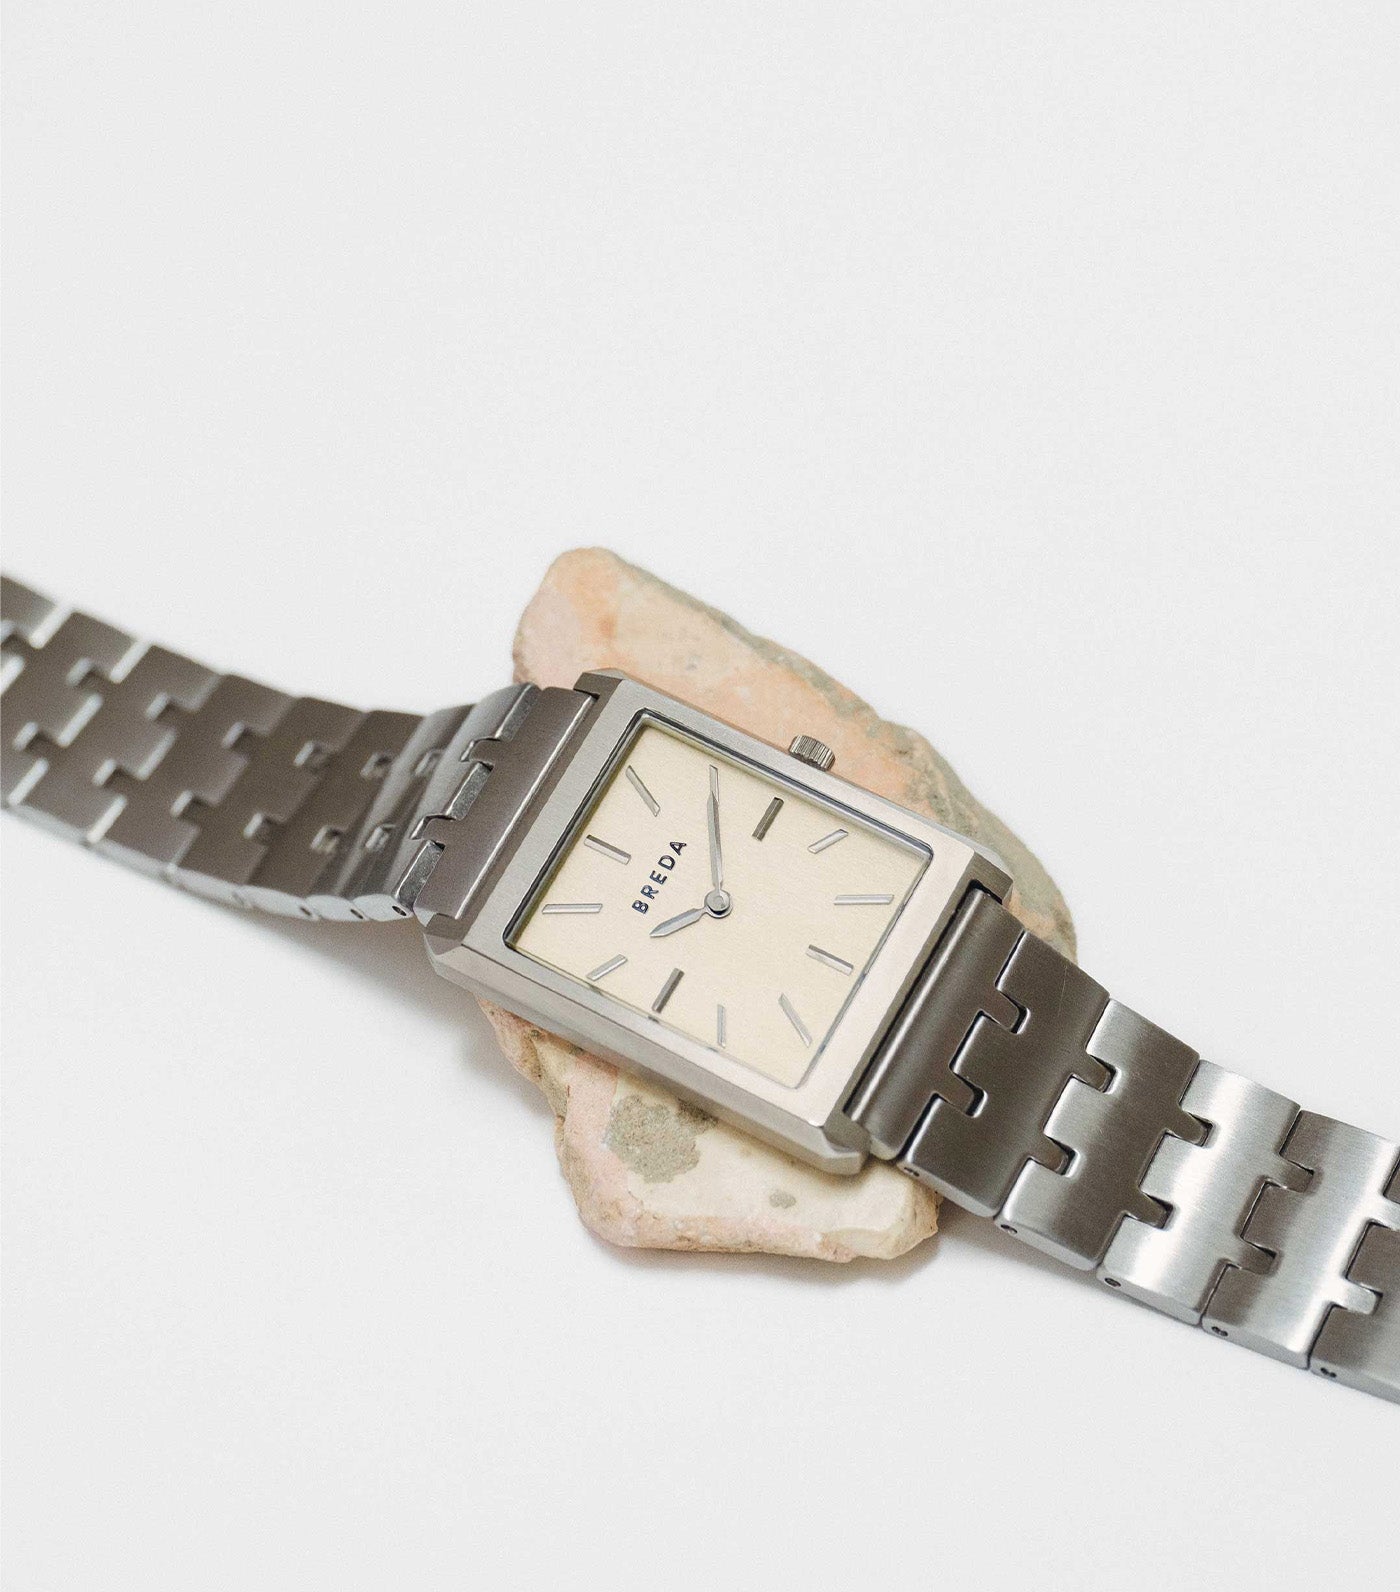 Virgil Stainless Steel and Metal Bracelet Watch 26MM Silver